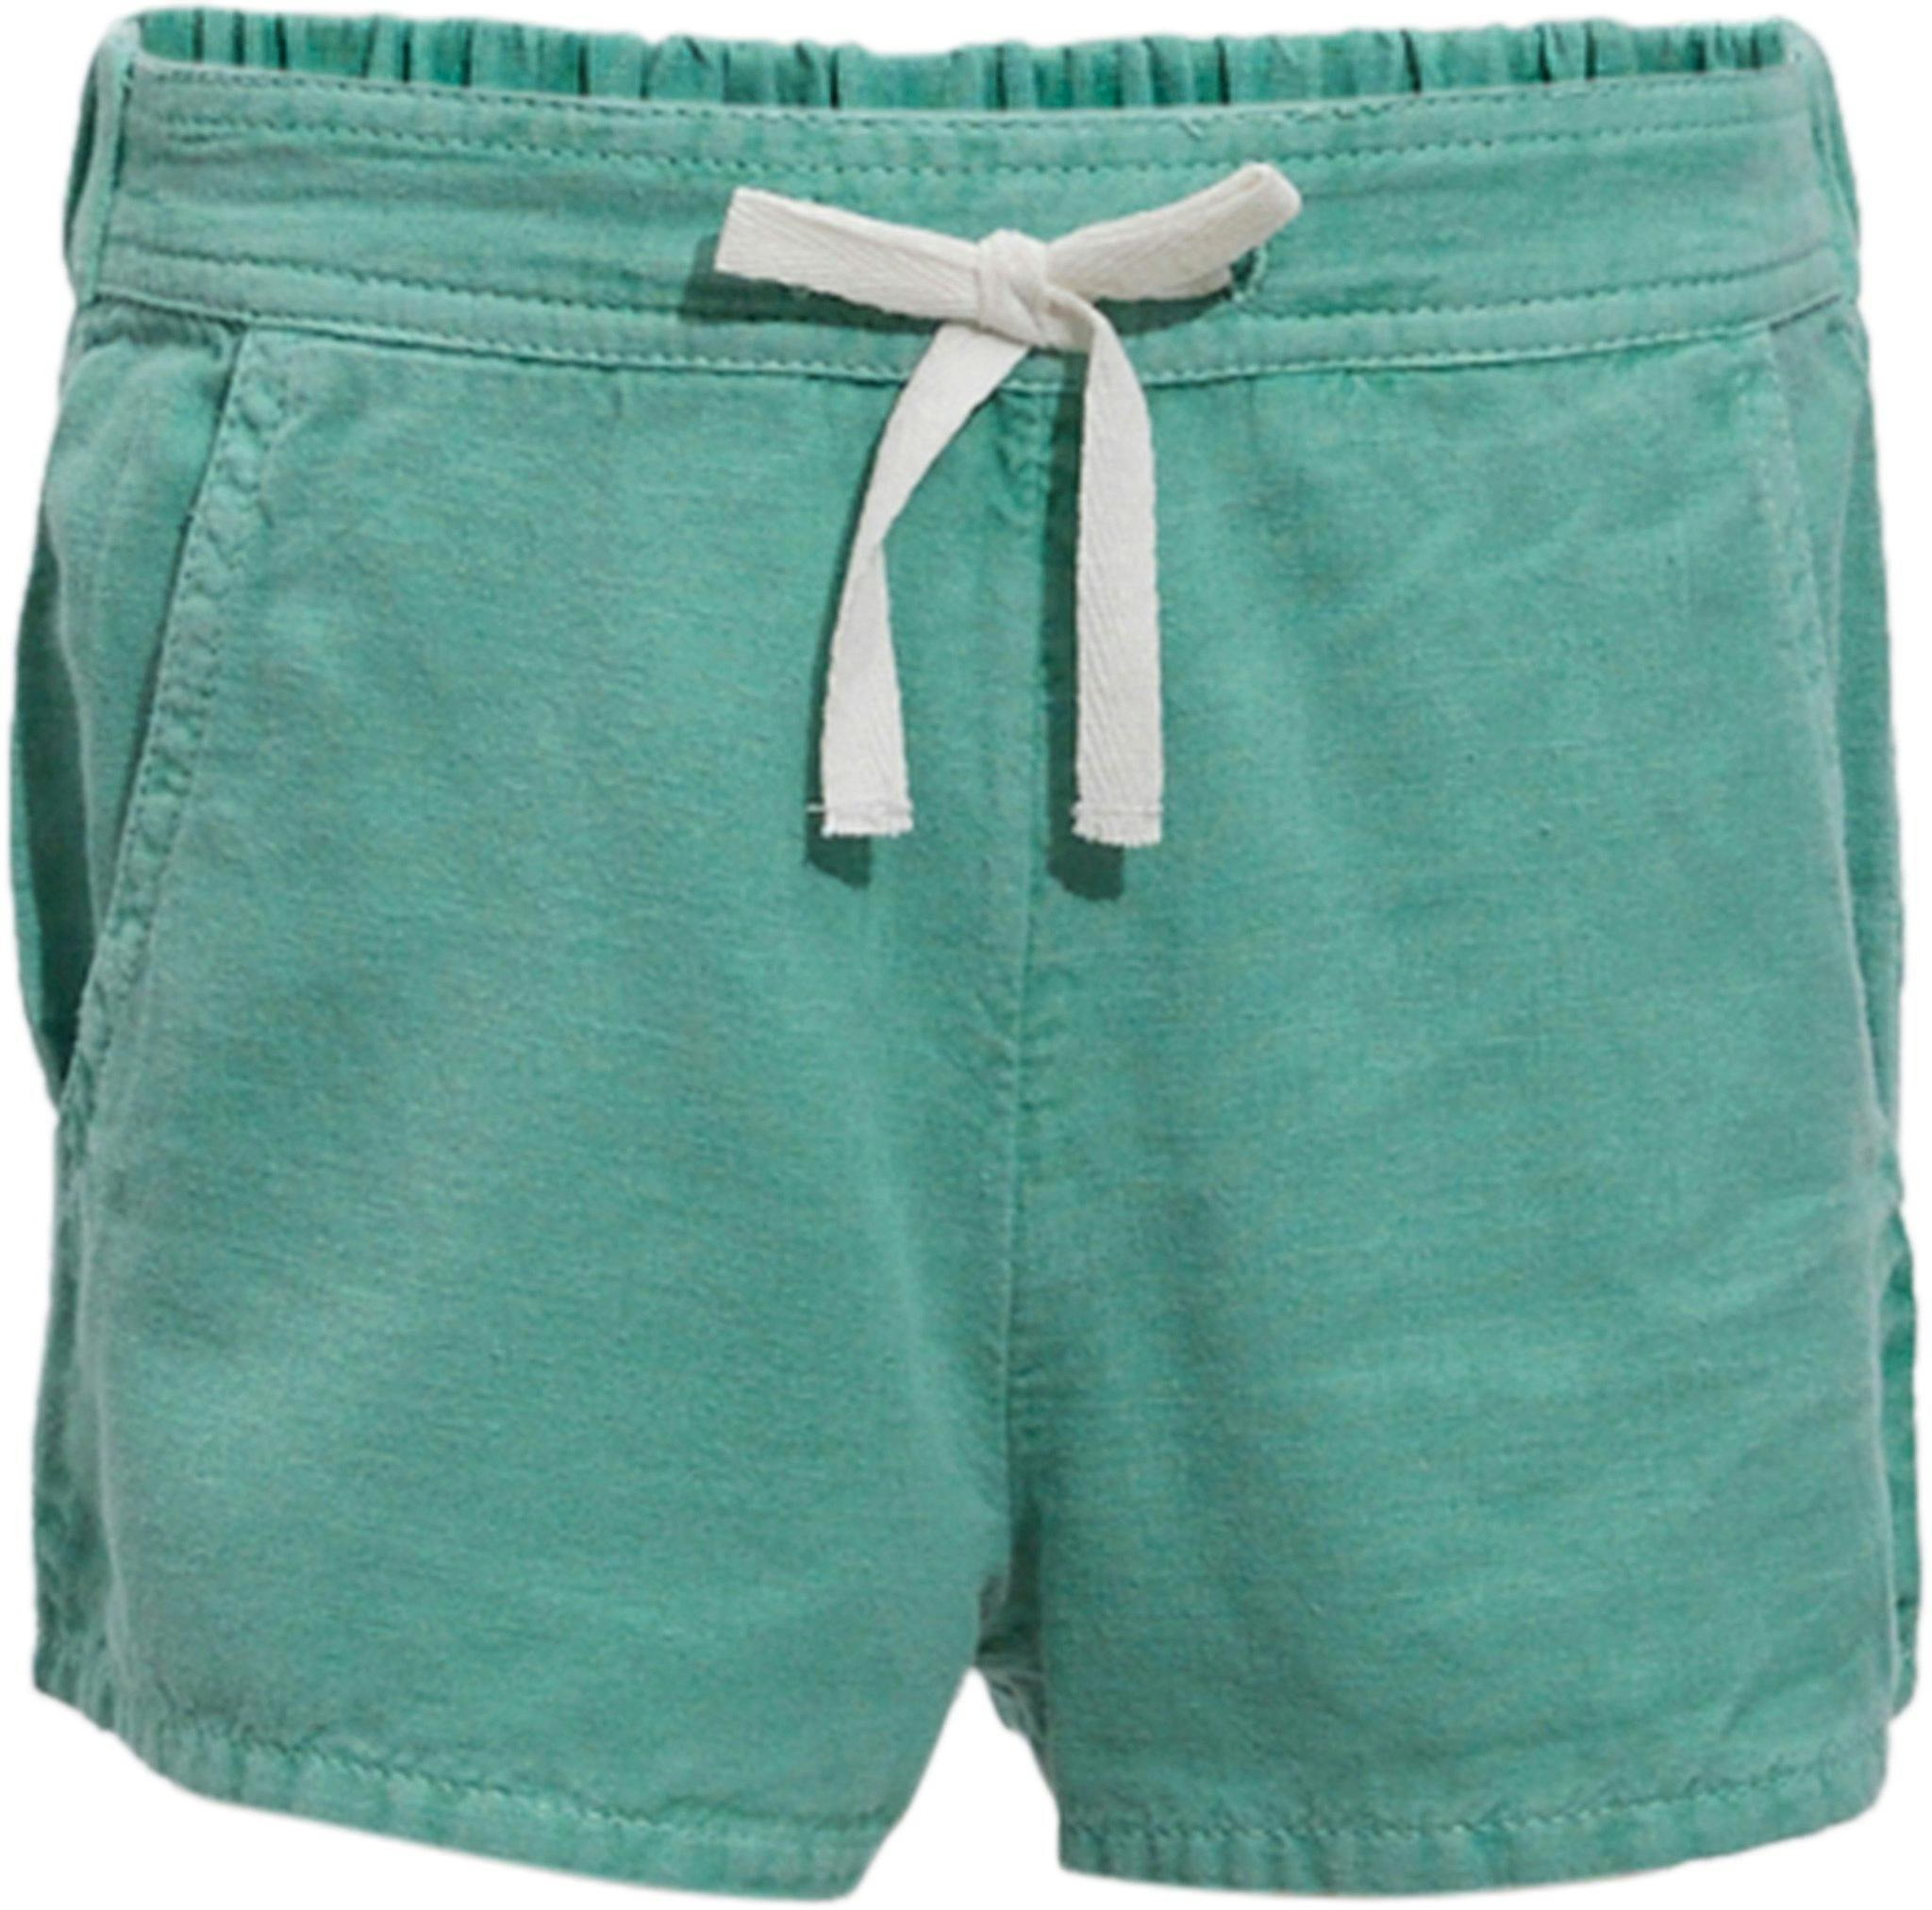 Product image for Sage Shorts - Girls